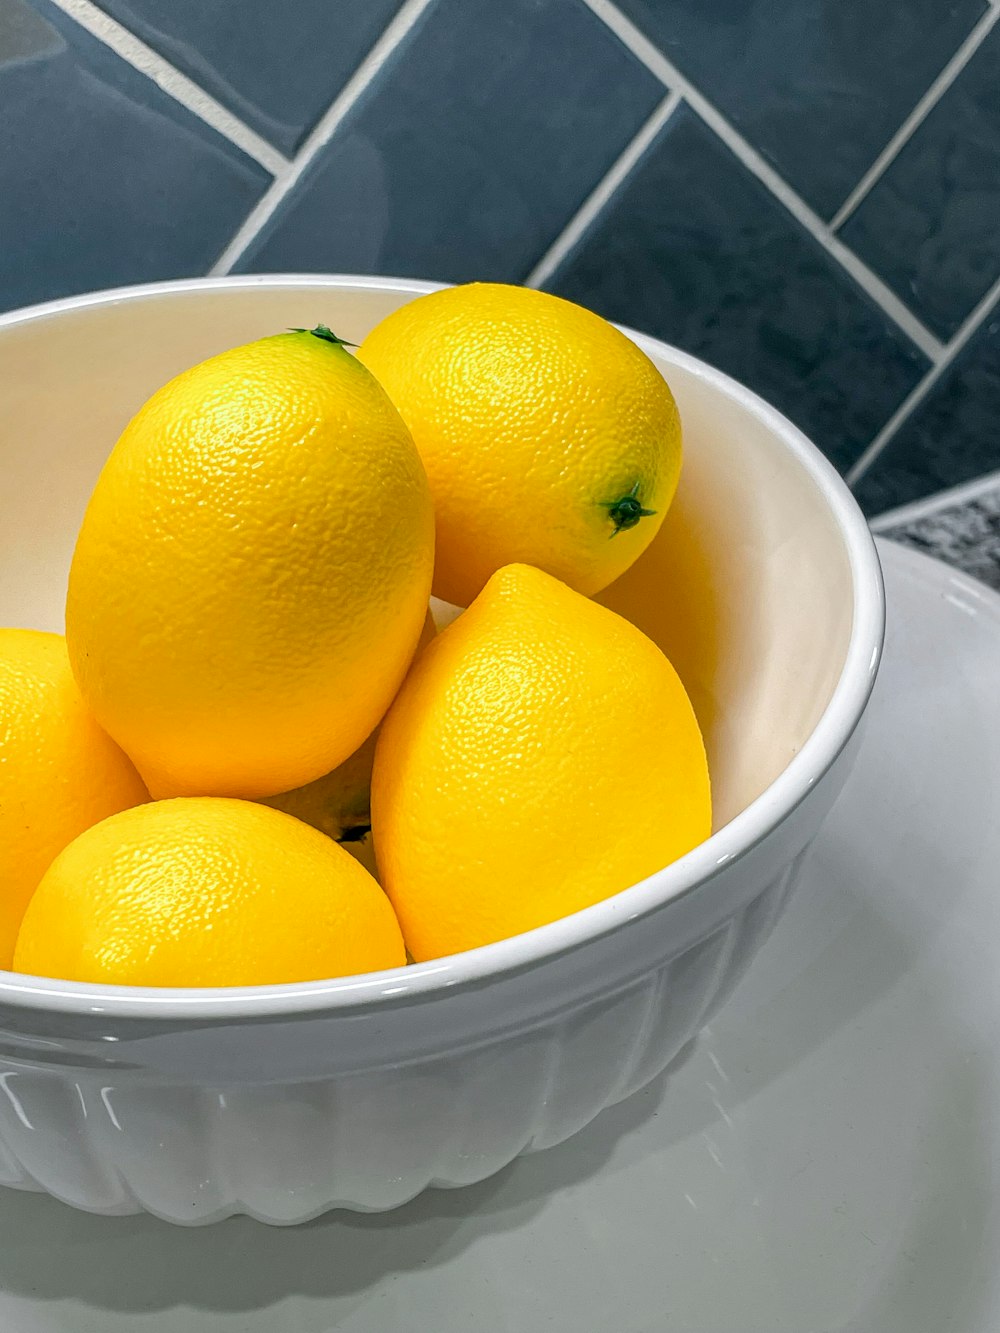 yellow citrus fruits in white ceramic bowl